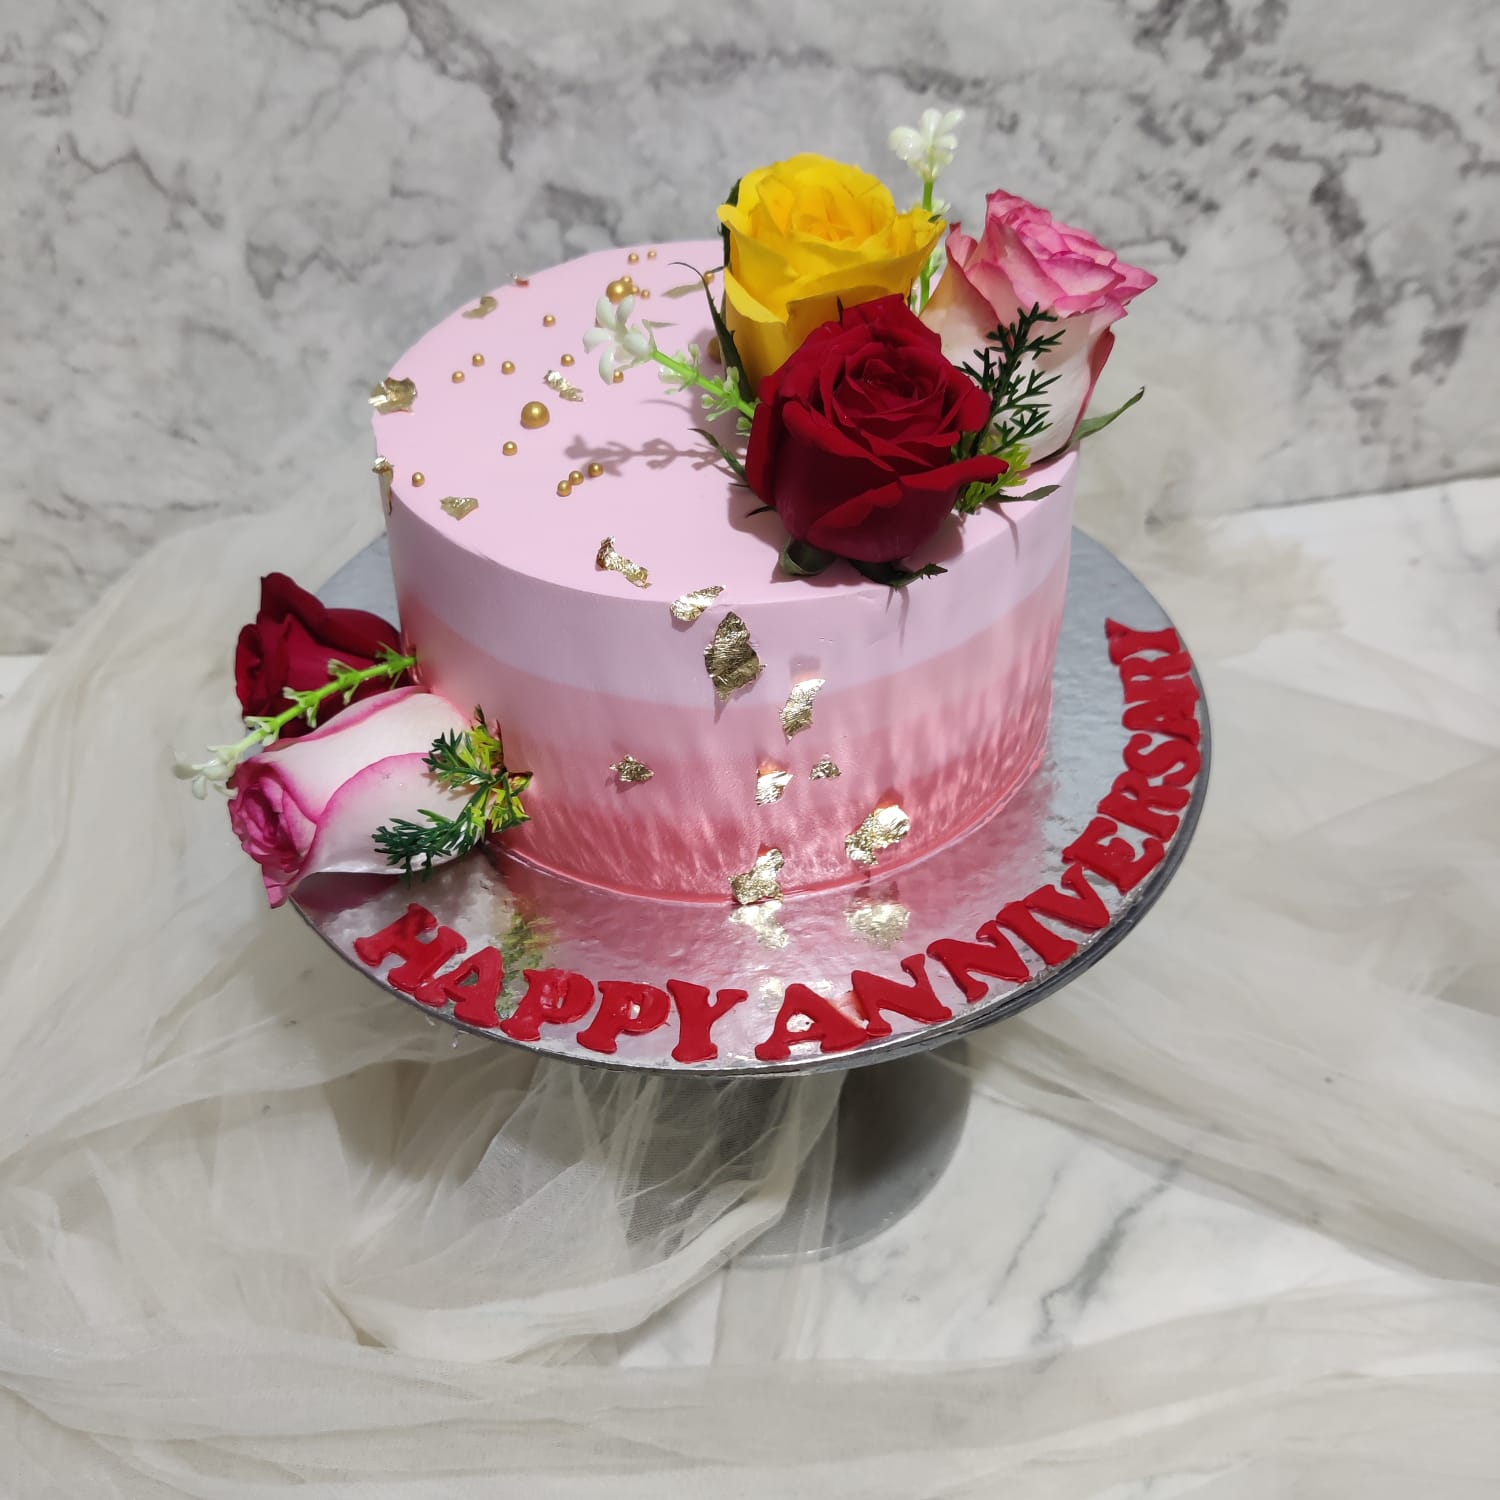 happy wedding anniversary cake with name and photo